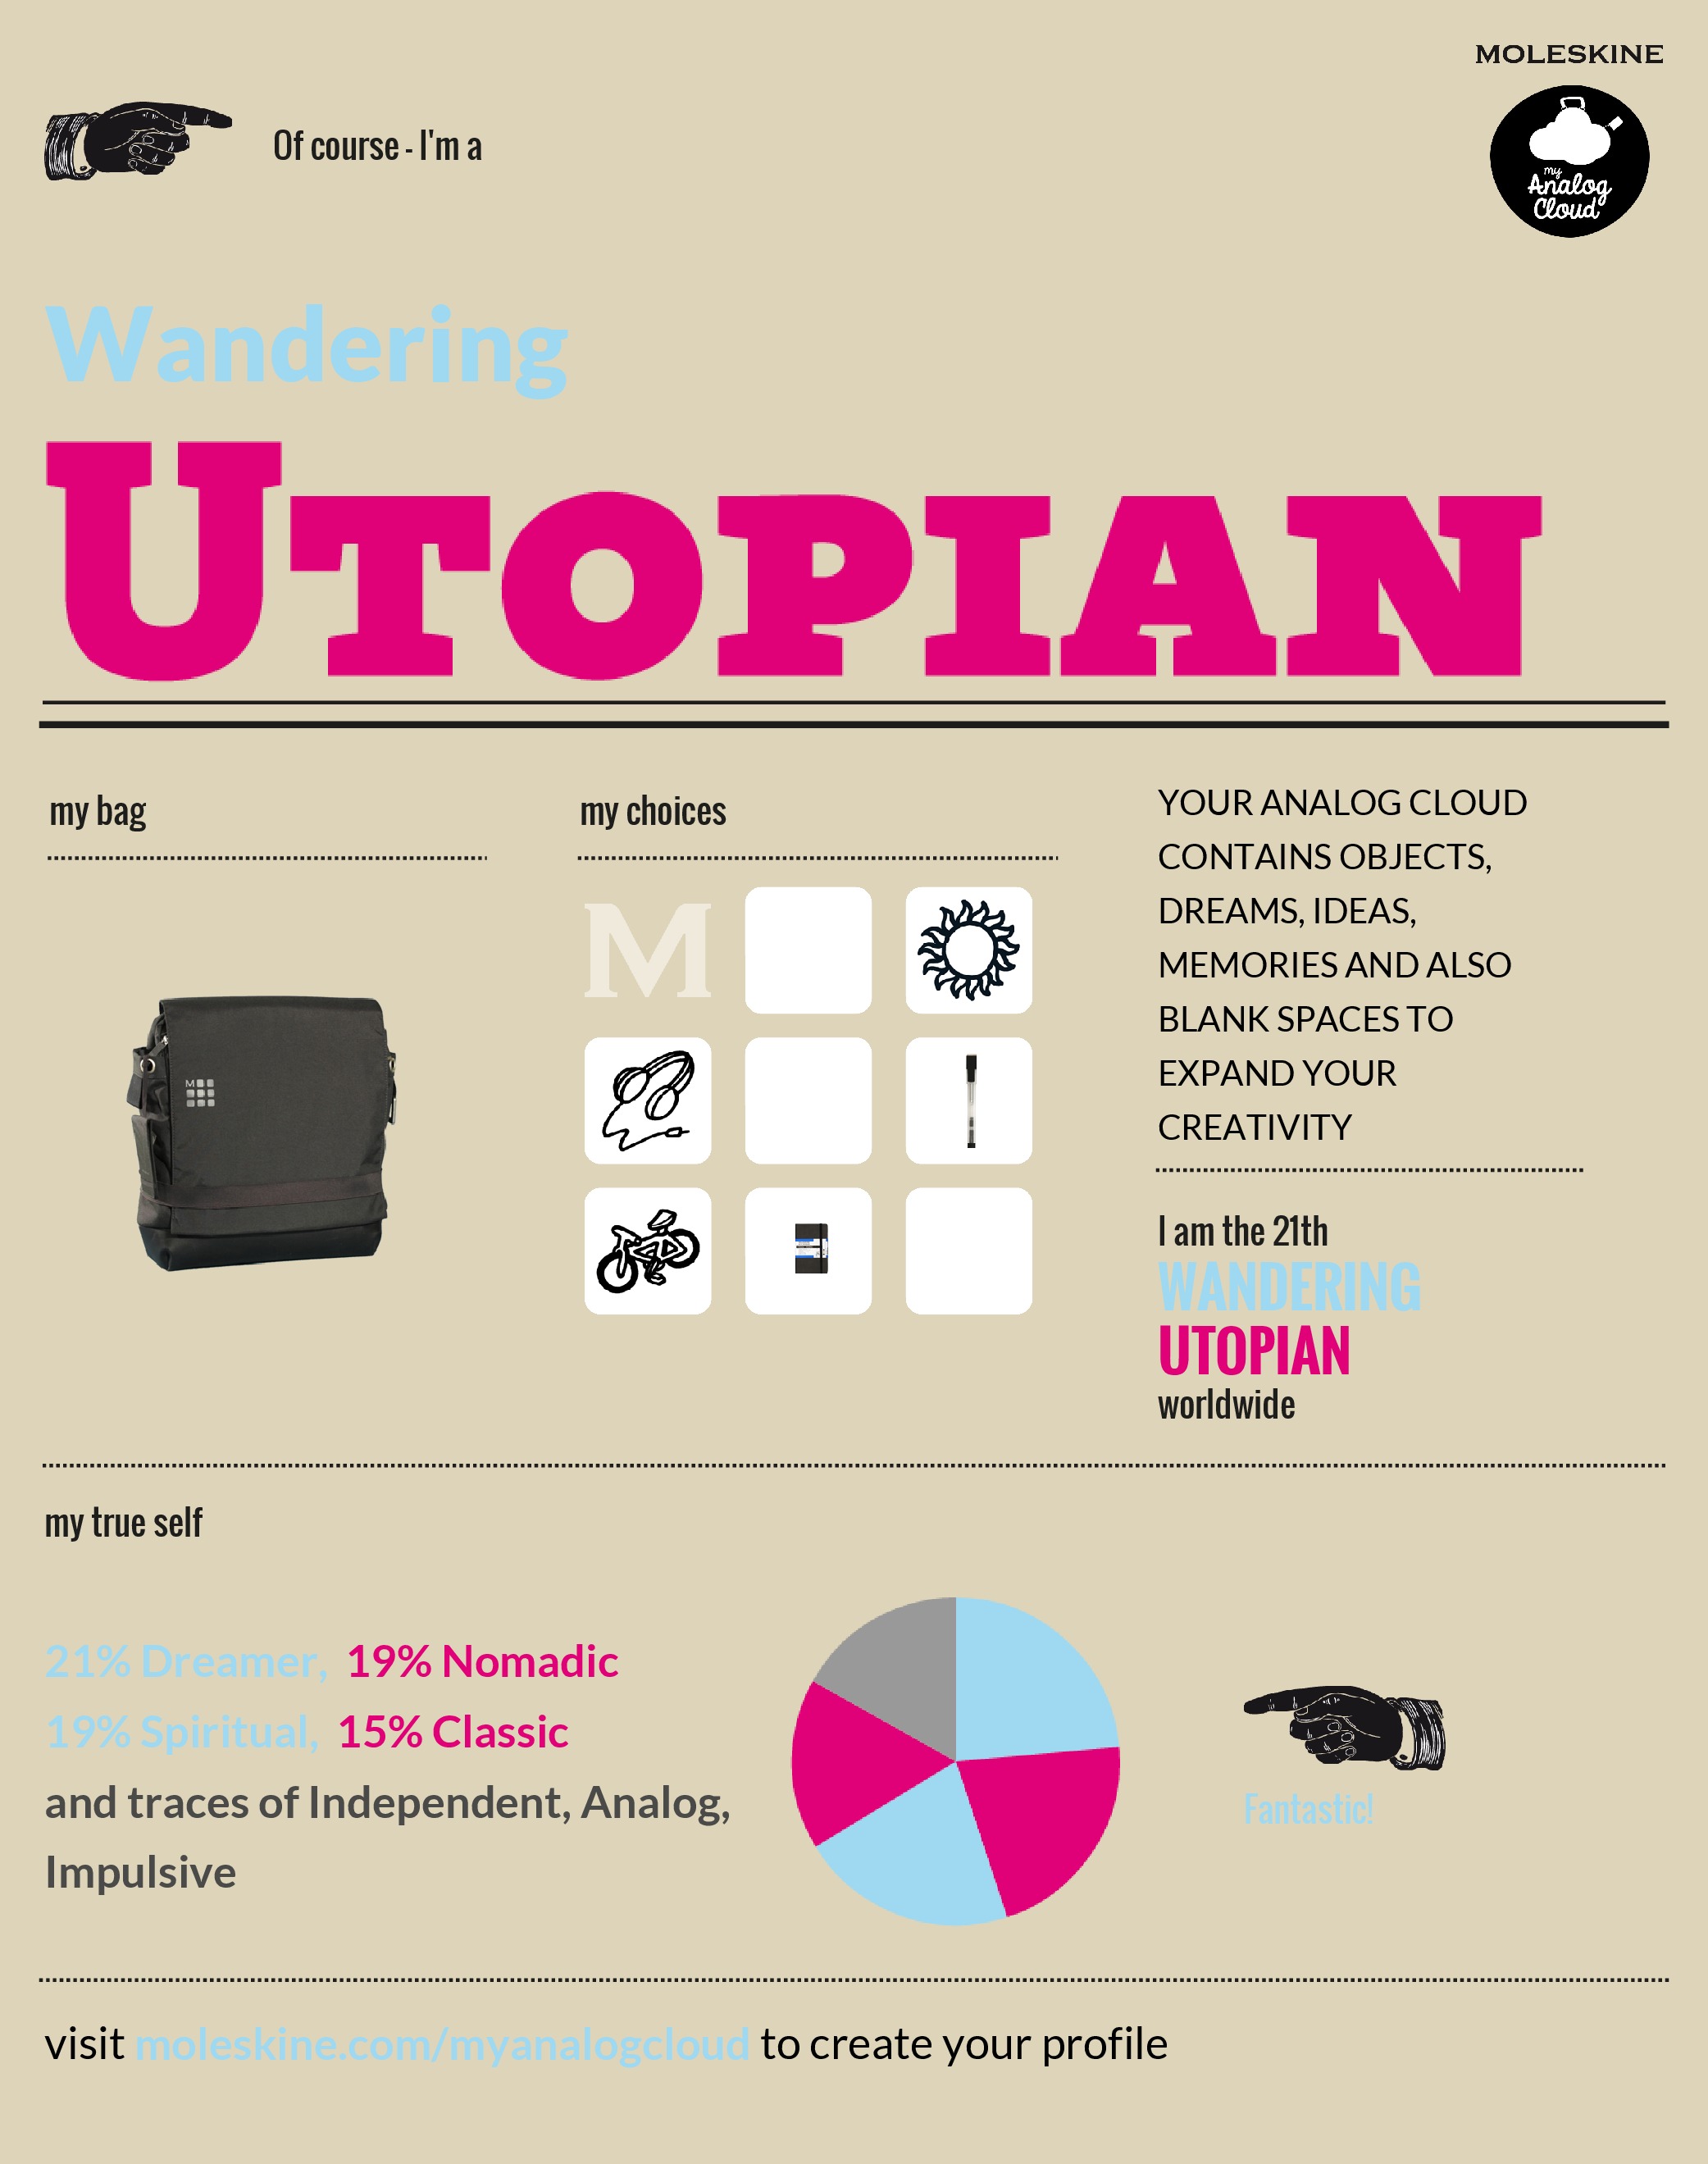 Wandering Utopian